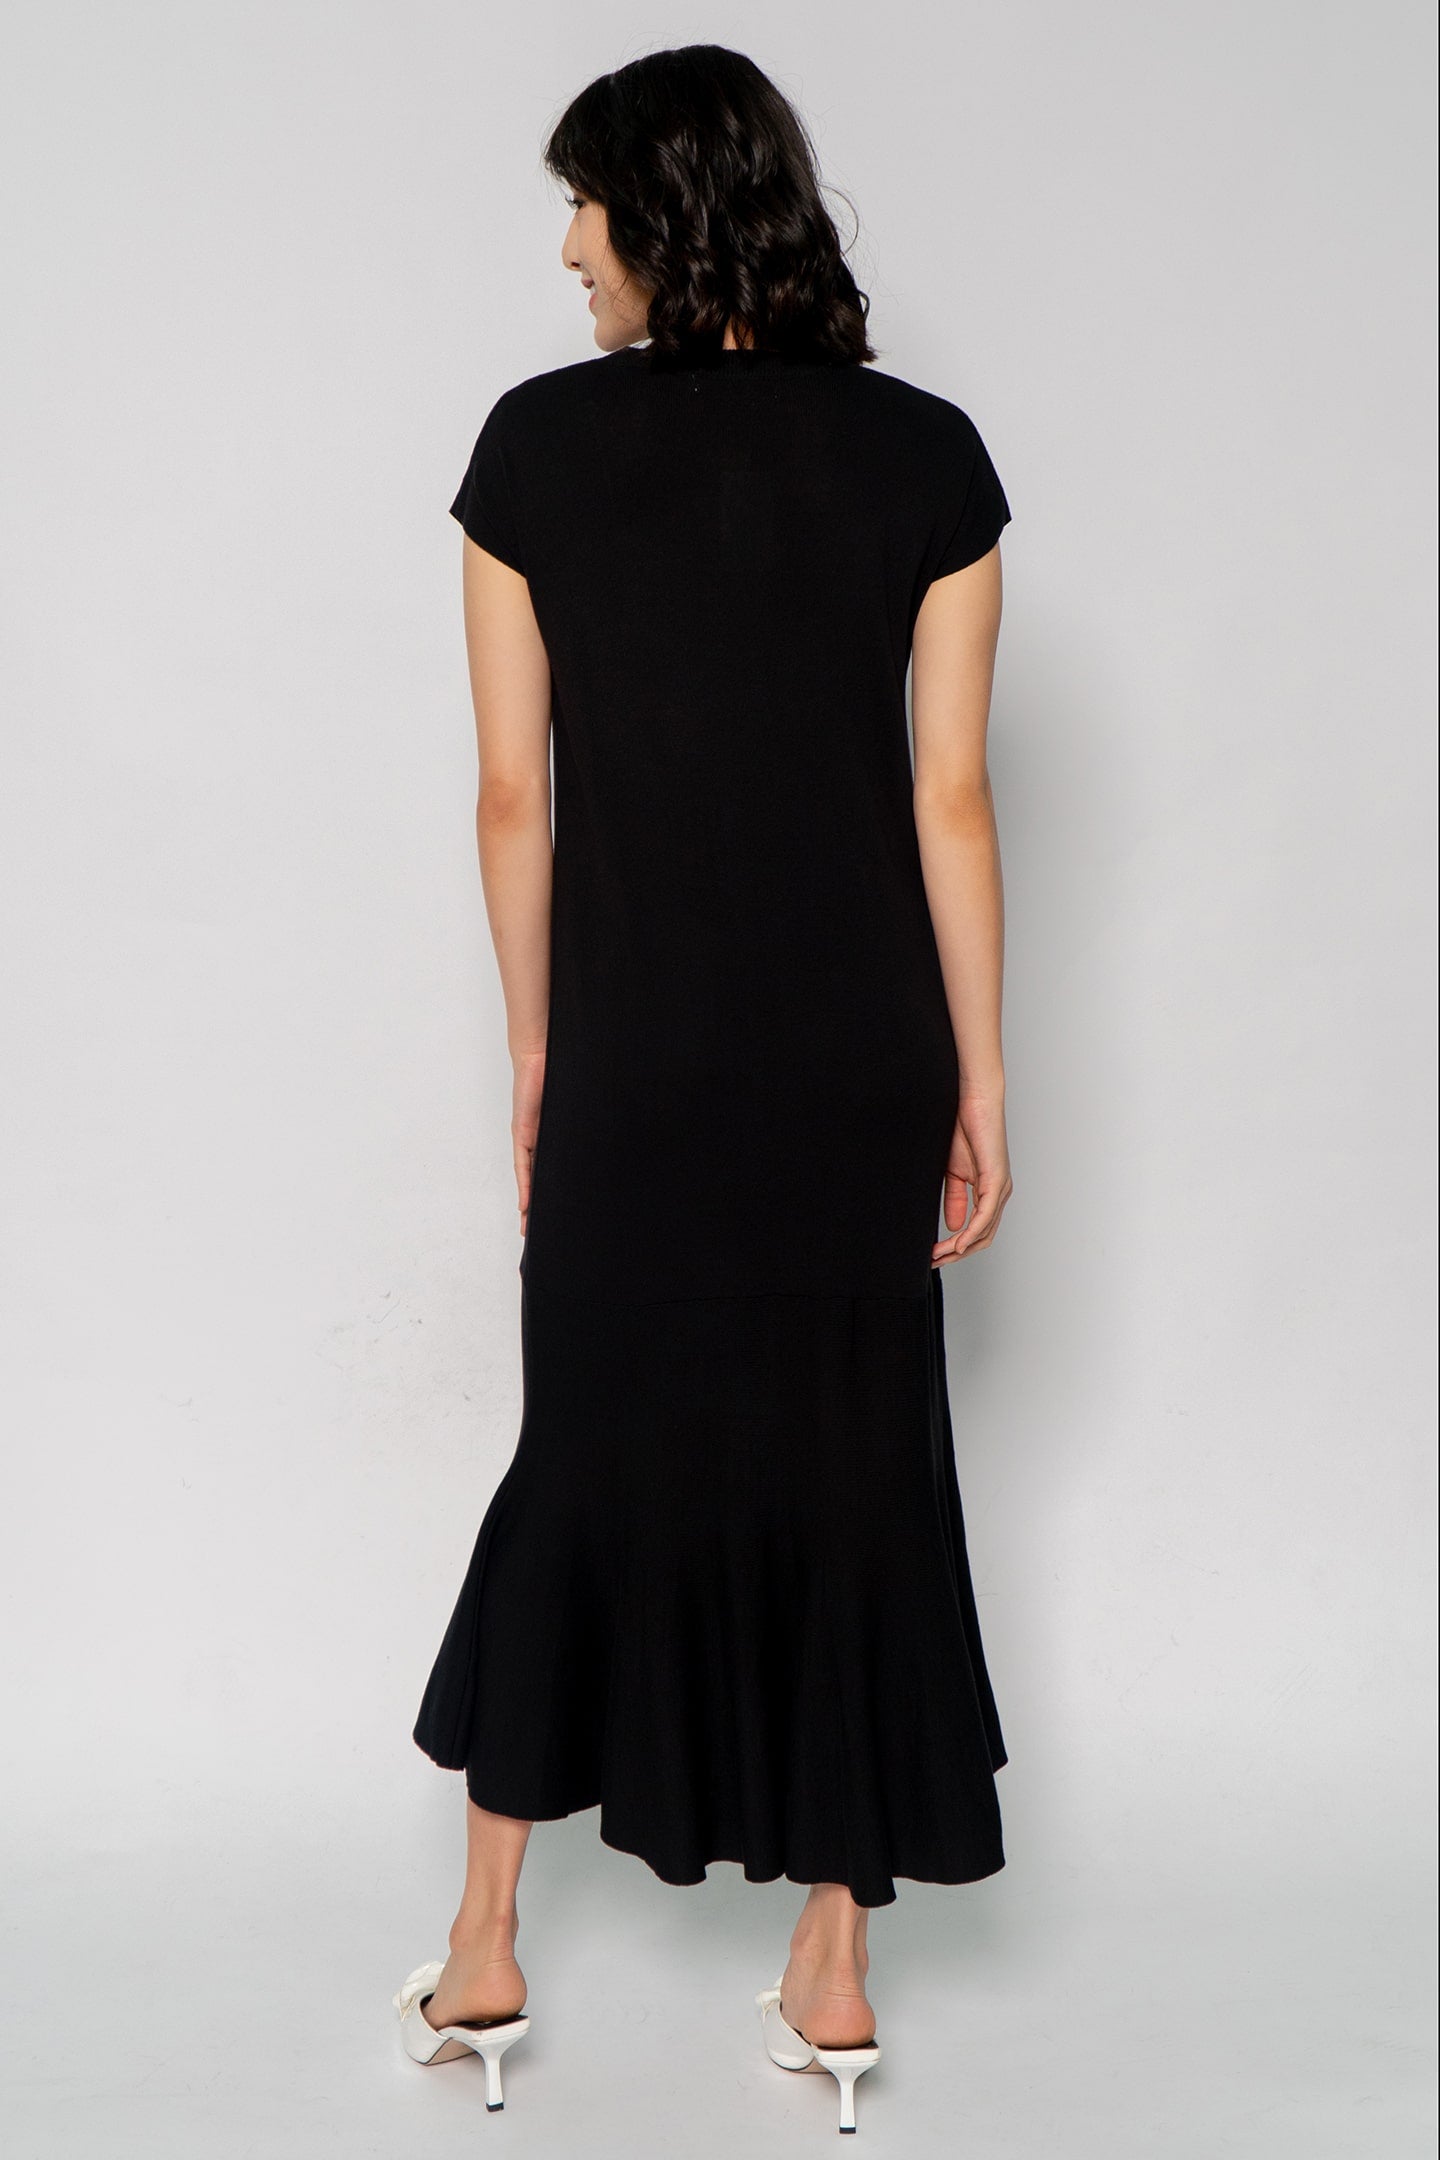 Giovanni Knit Dress in Black